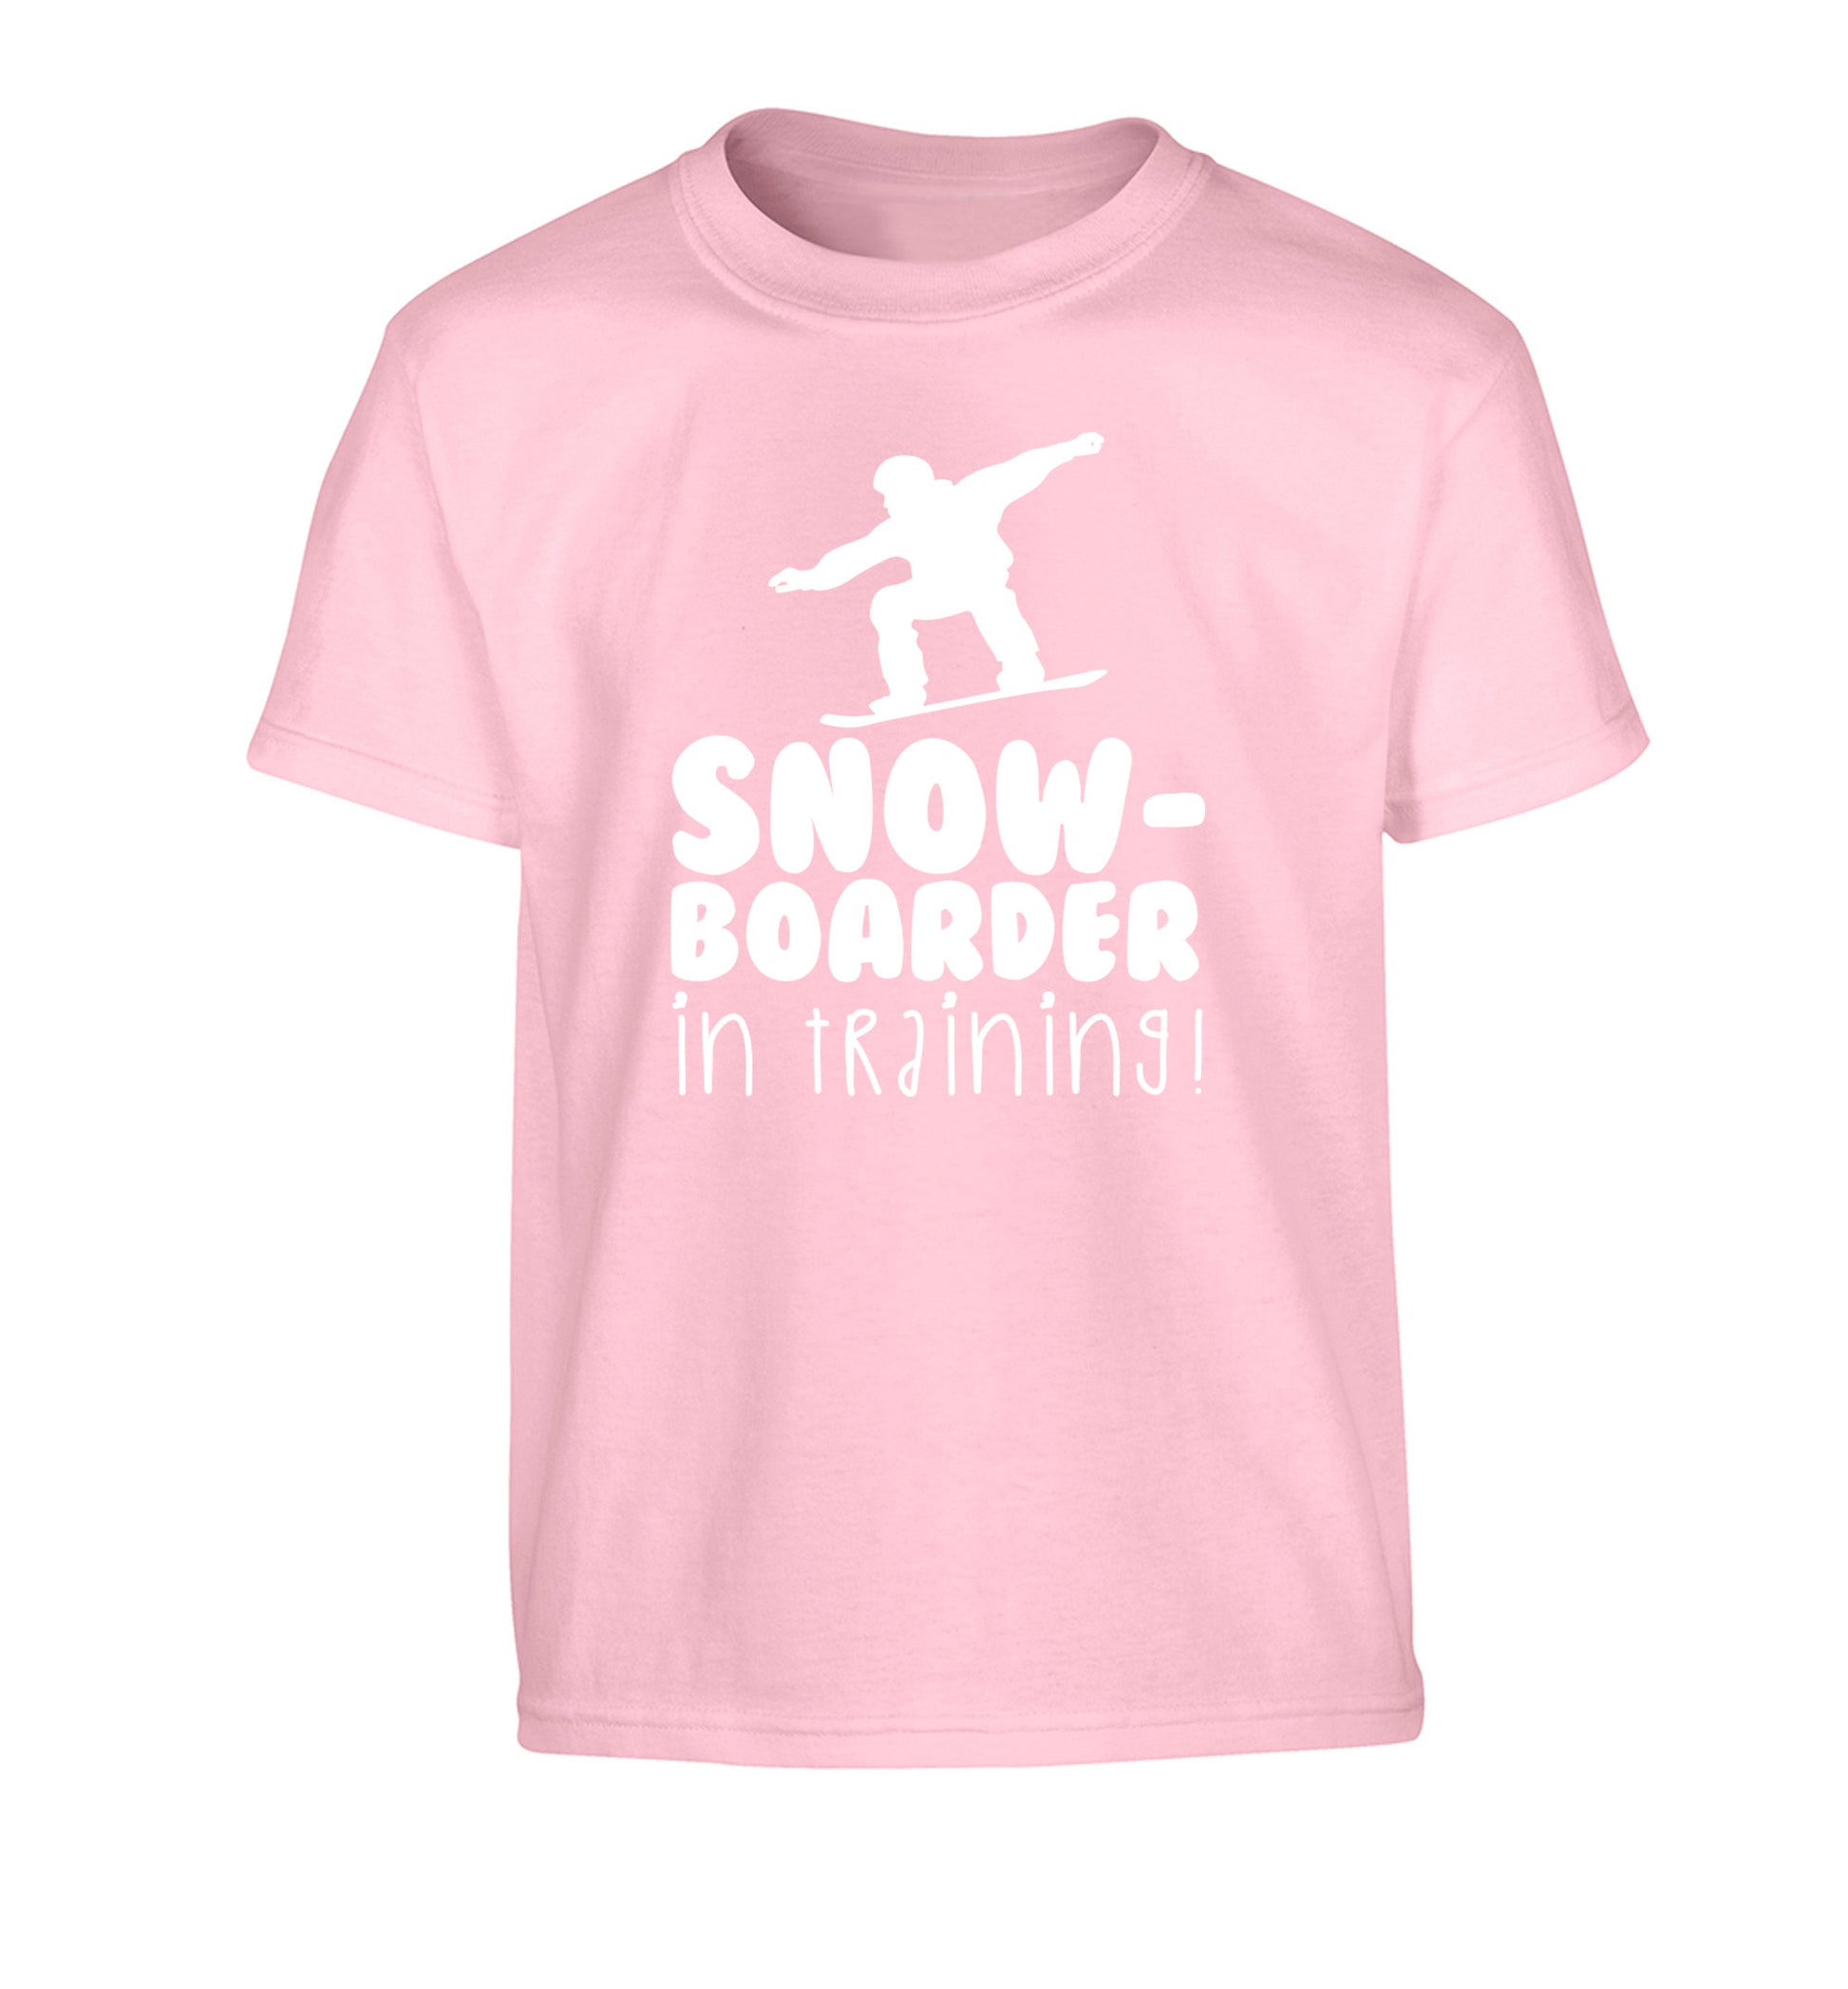 Snowboarder in training Children's light pink Tshirt 12-14 Years